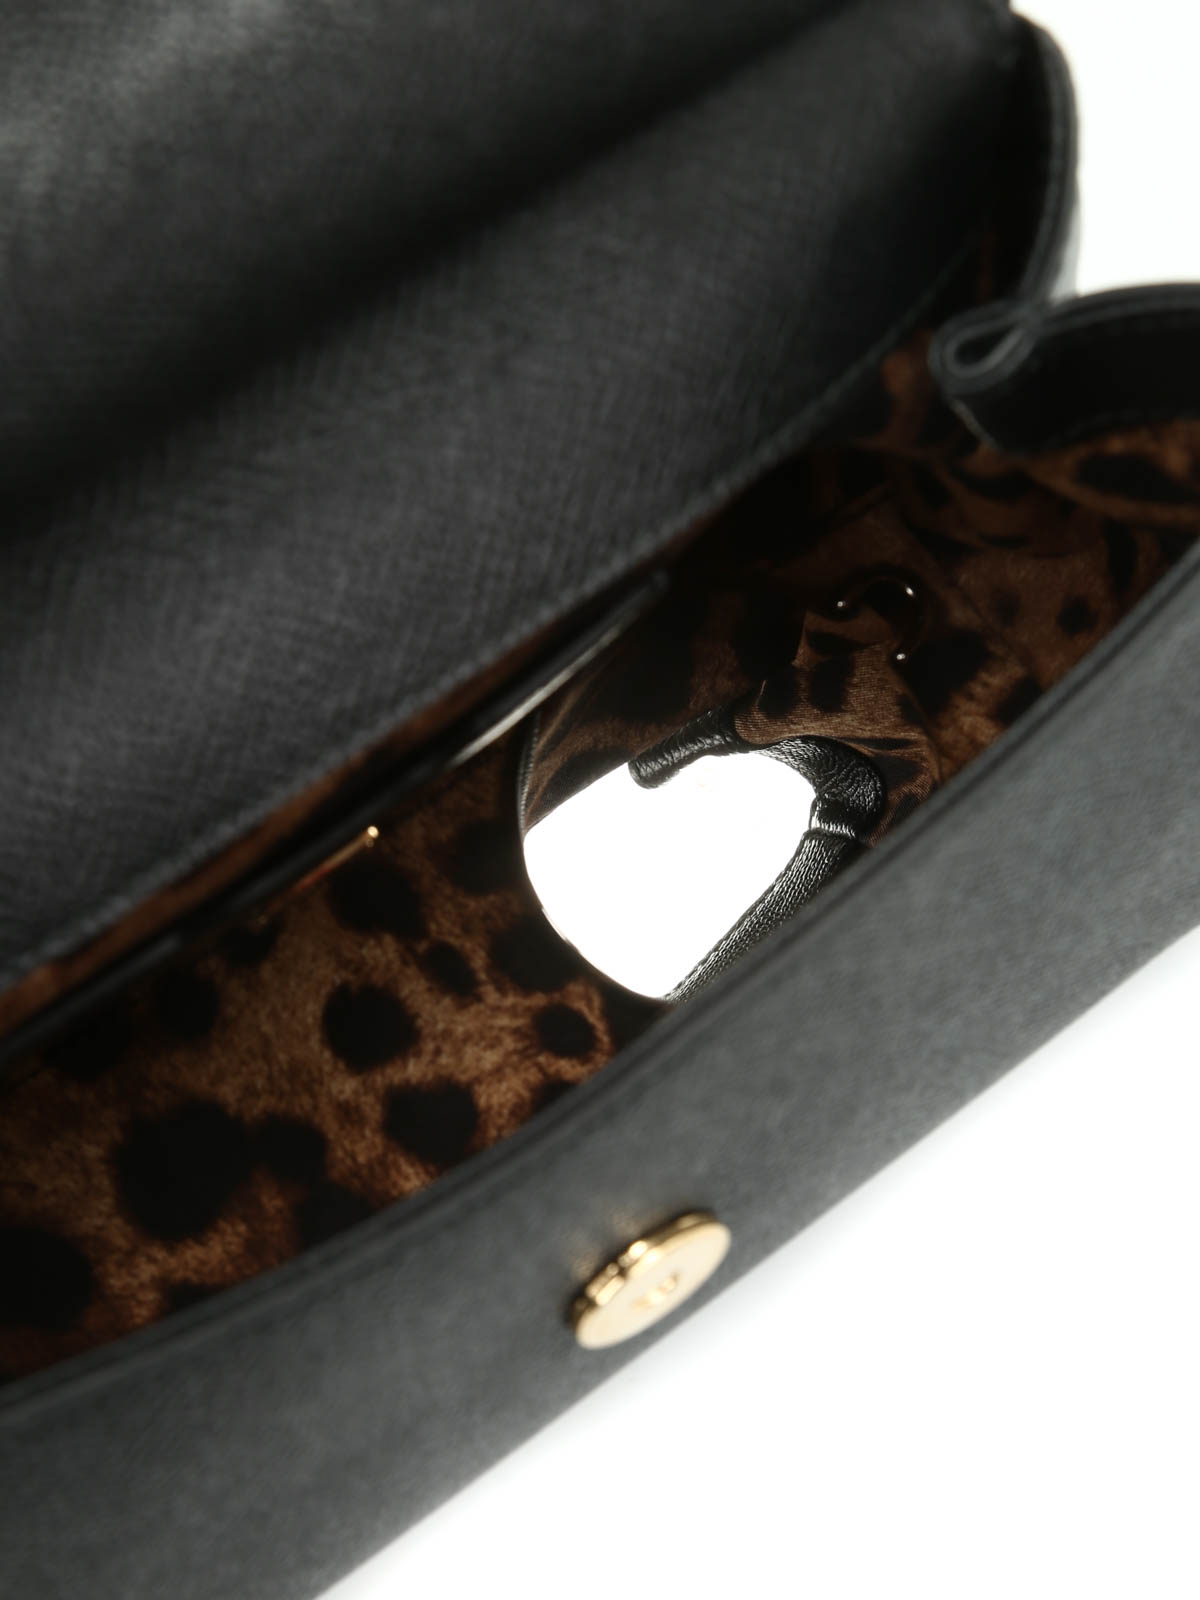 Dolce&Gabbana Handbags sicily large Women BB6002A100180999 Leather Black  1280€